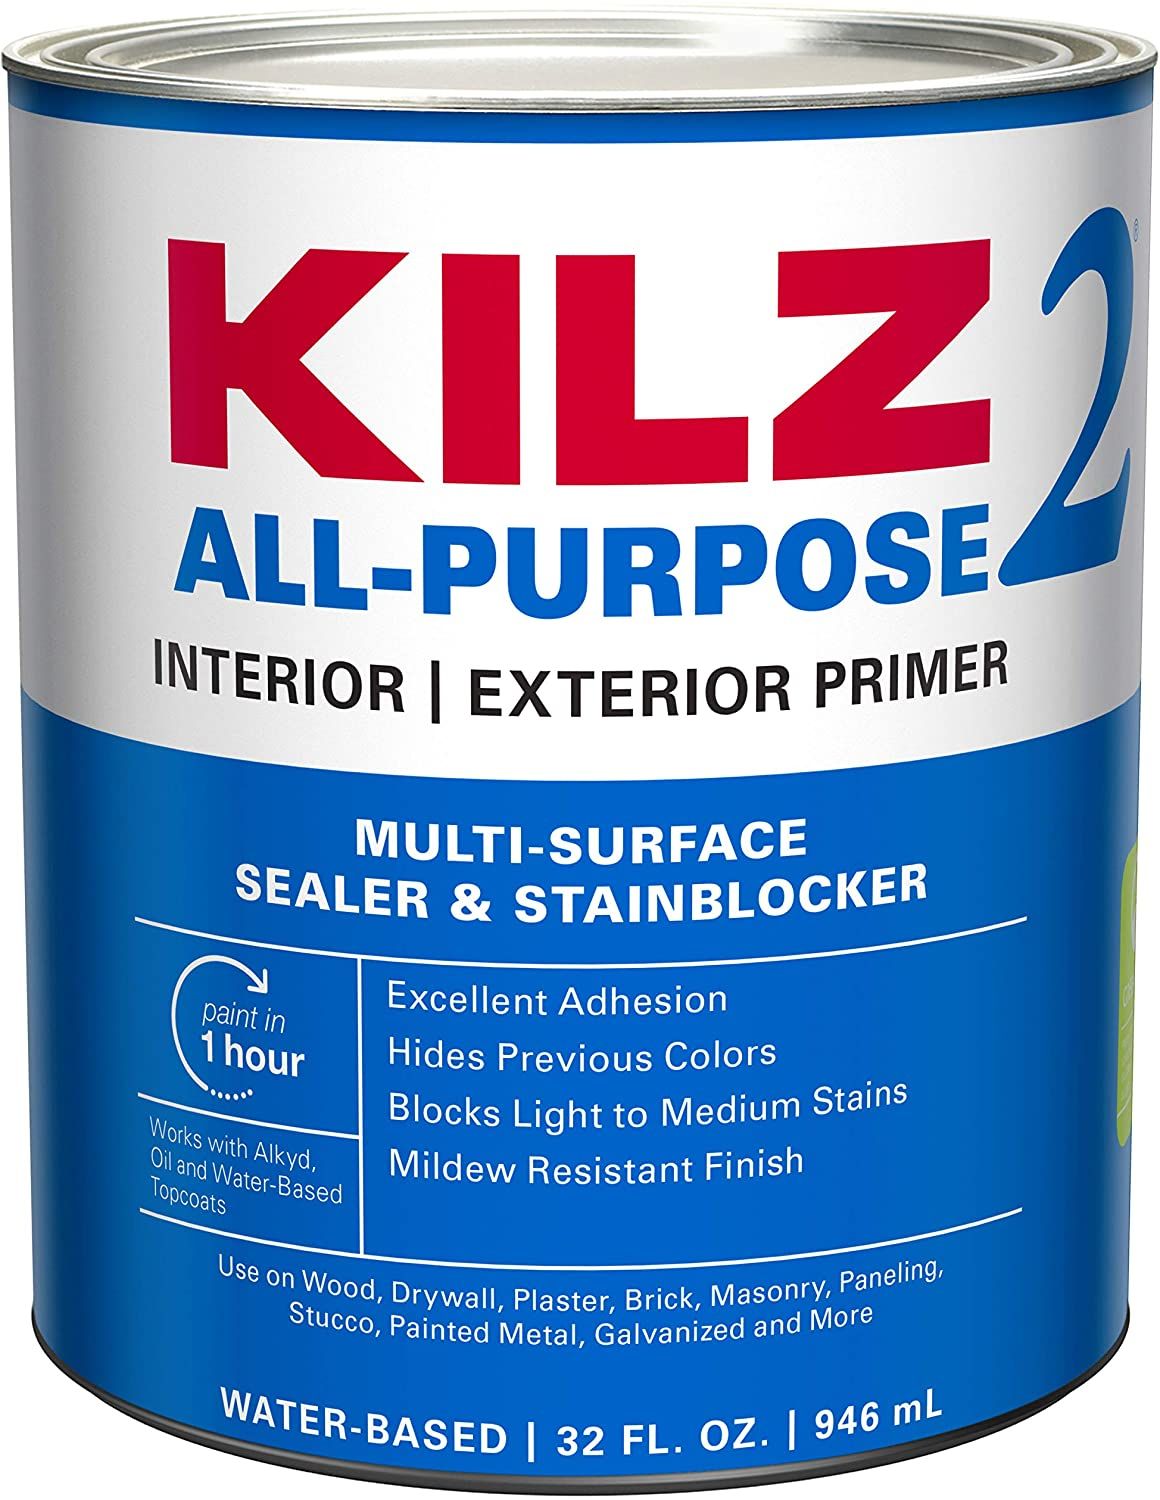 KILZ 2 All-Purpose Interior/Exterior Primer